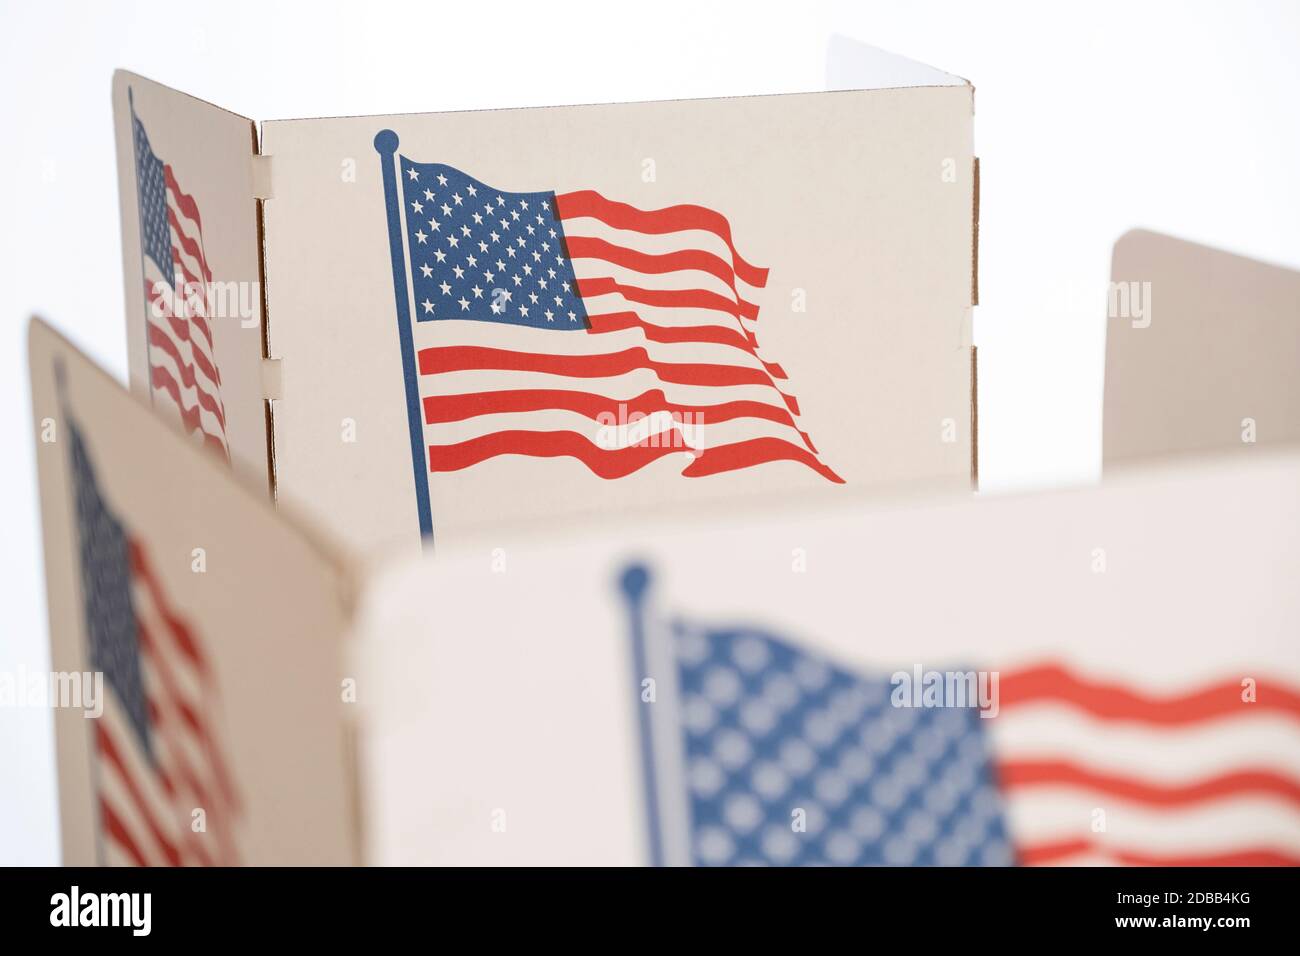 Cabina de votación con bandera estadounidense Foto de stock